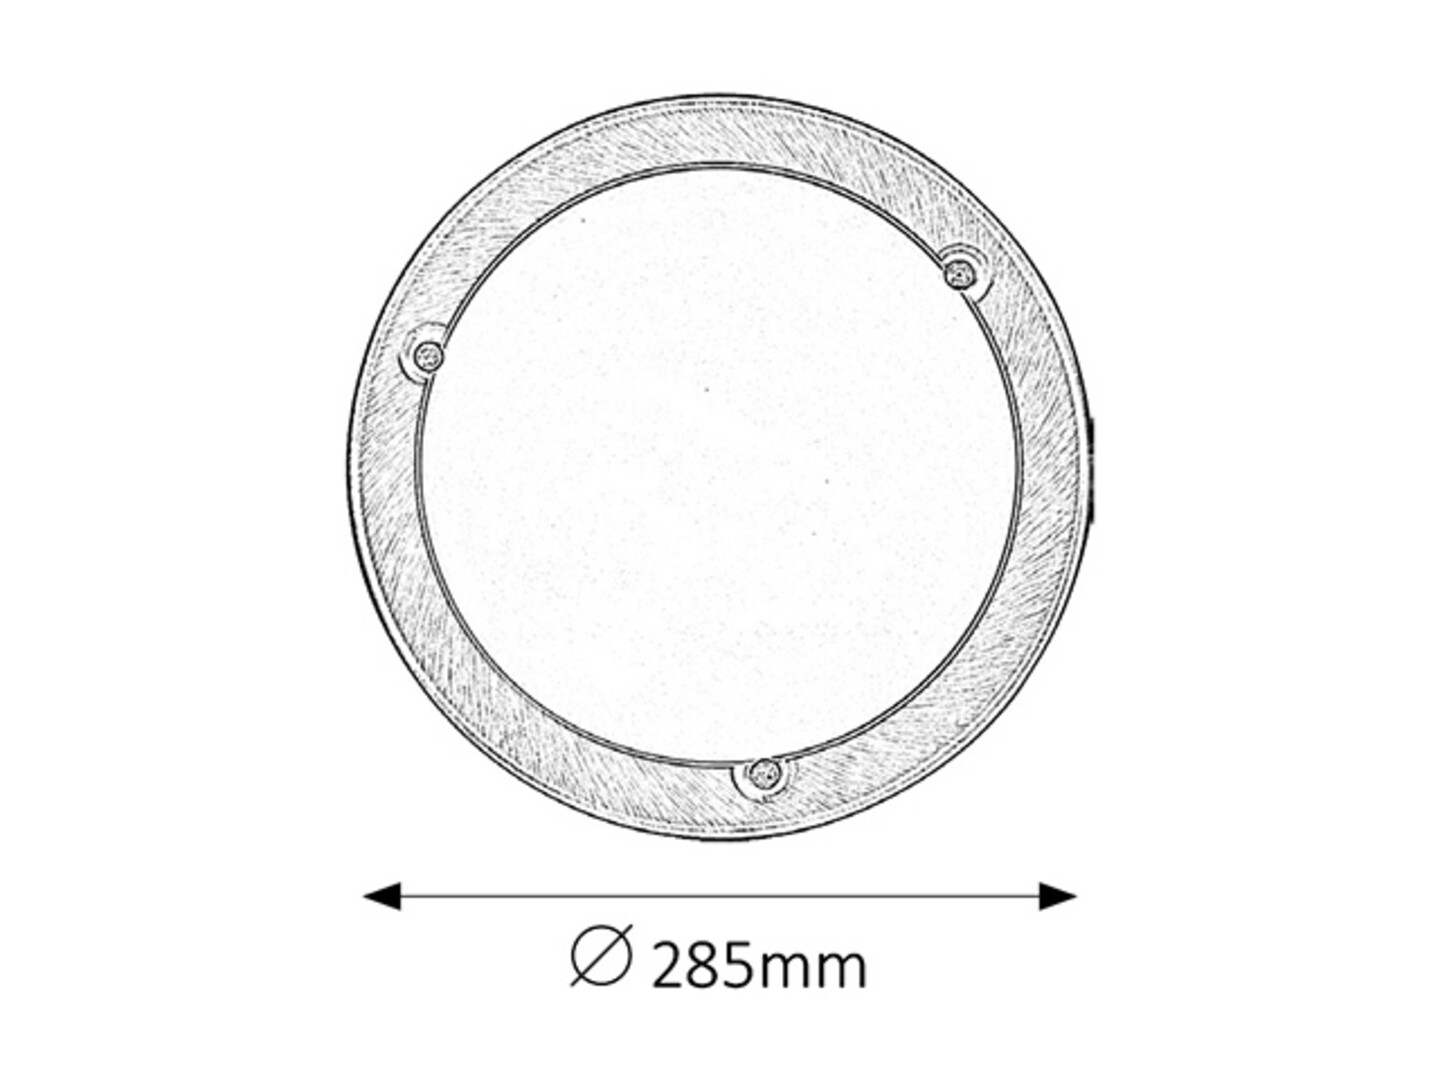 Deckenleuchte 1 Spot Ufo 5203, E27, Metall, bronze-silber-weiß, rund, Standard, ø285mm